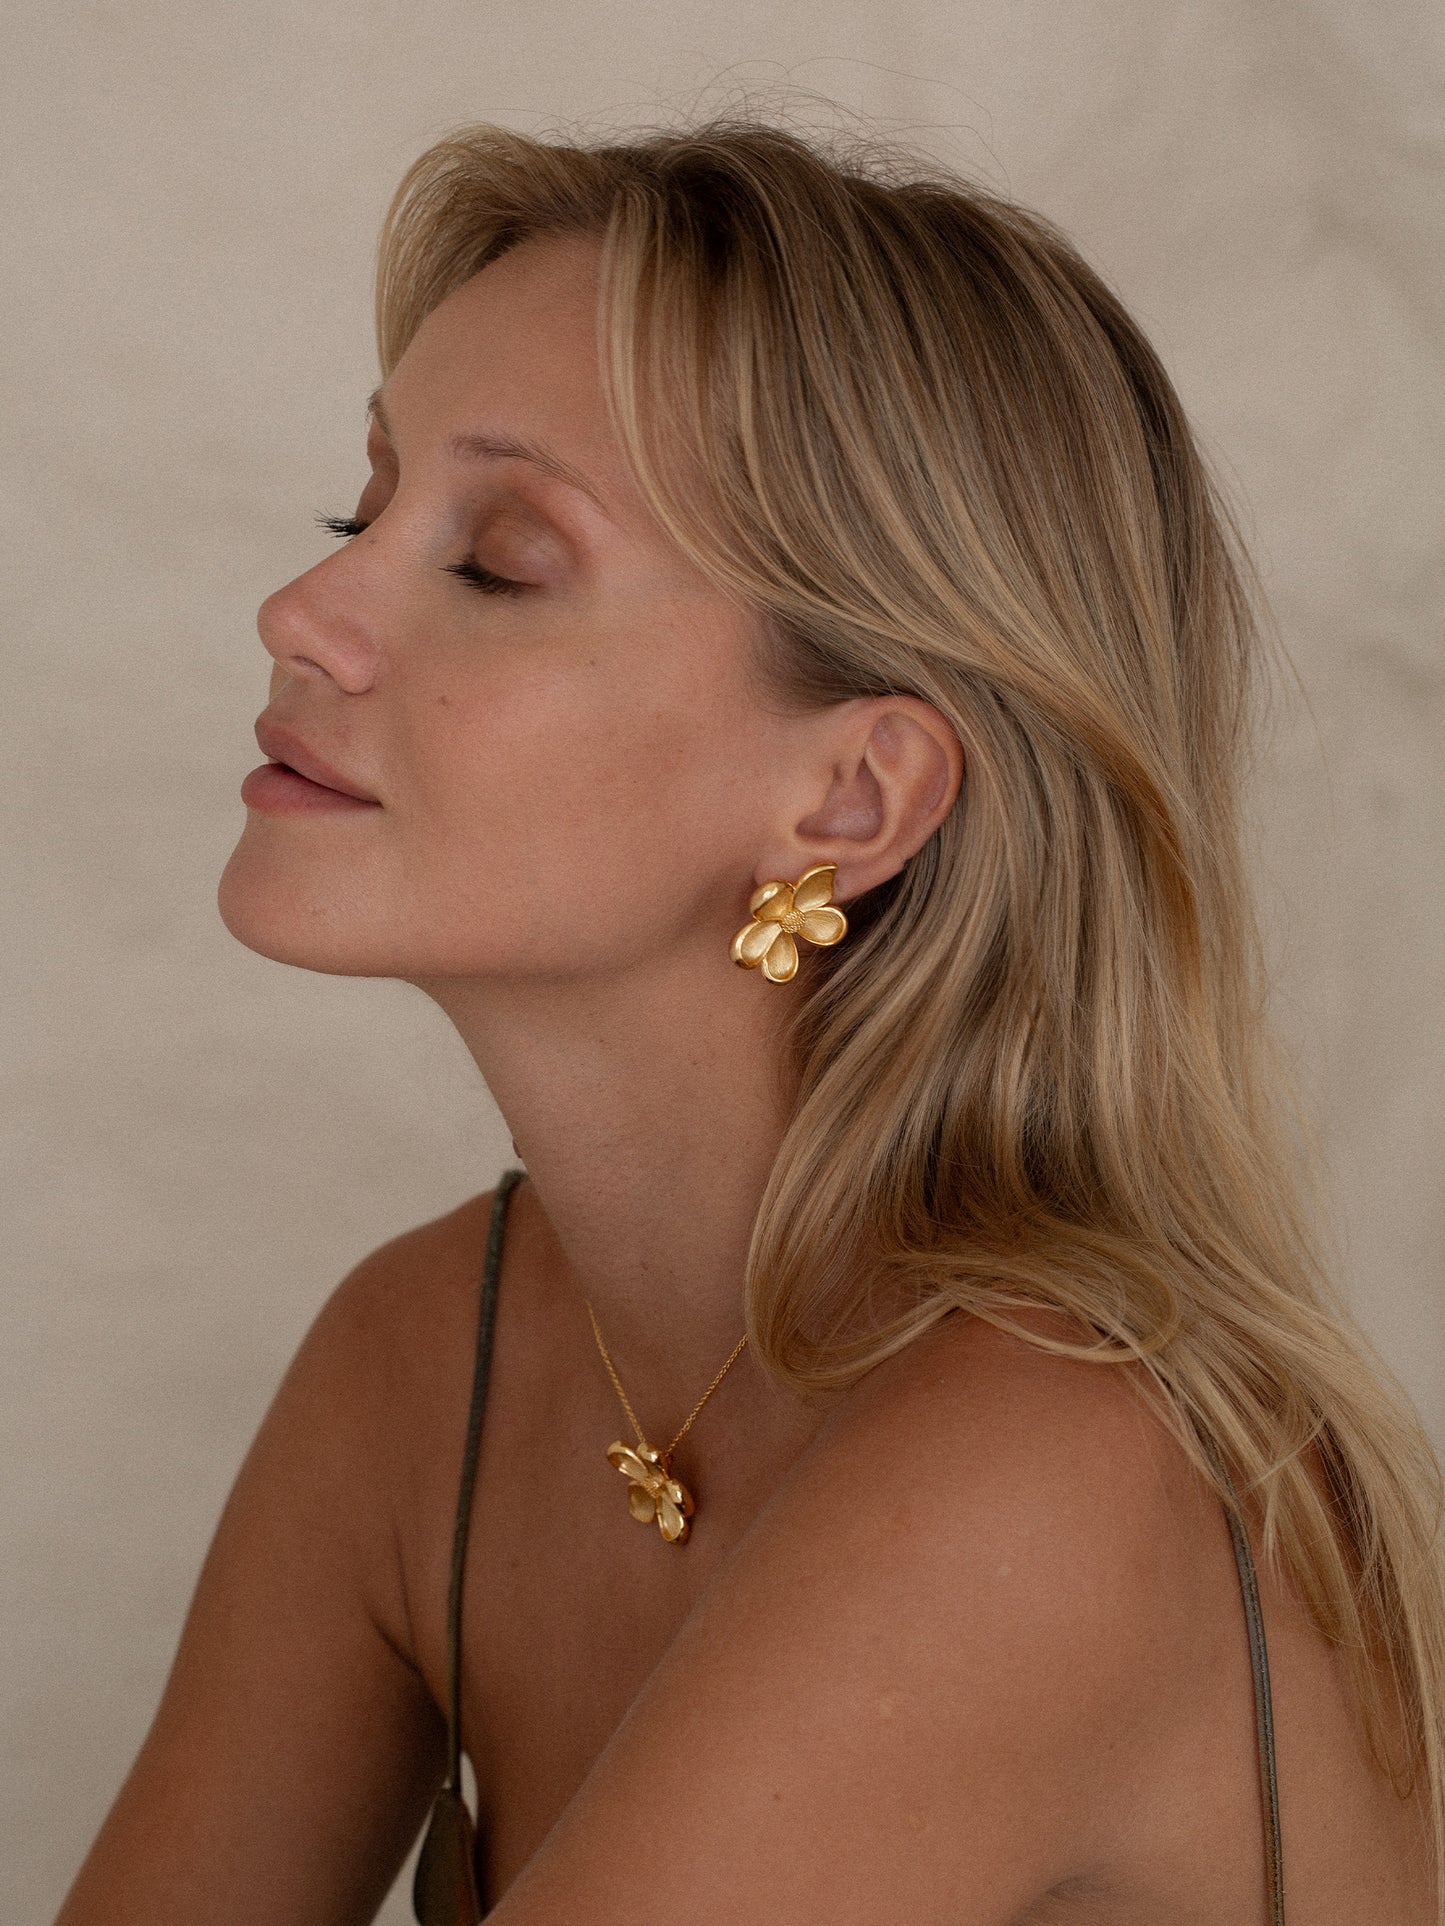 Maxi Flower Earring 18k gold plated brass